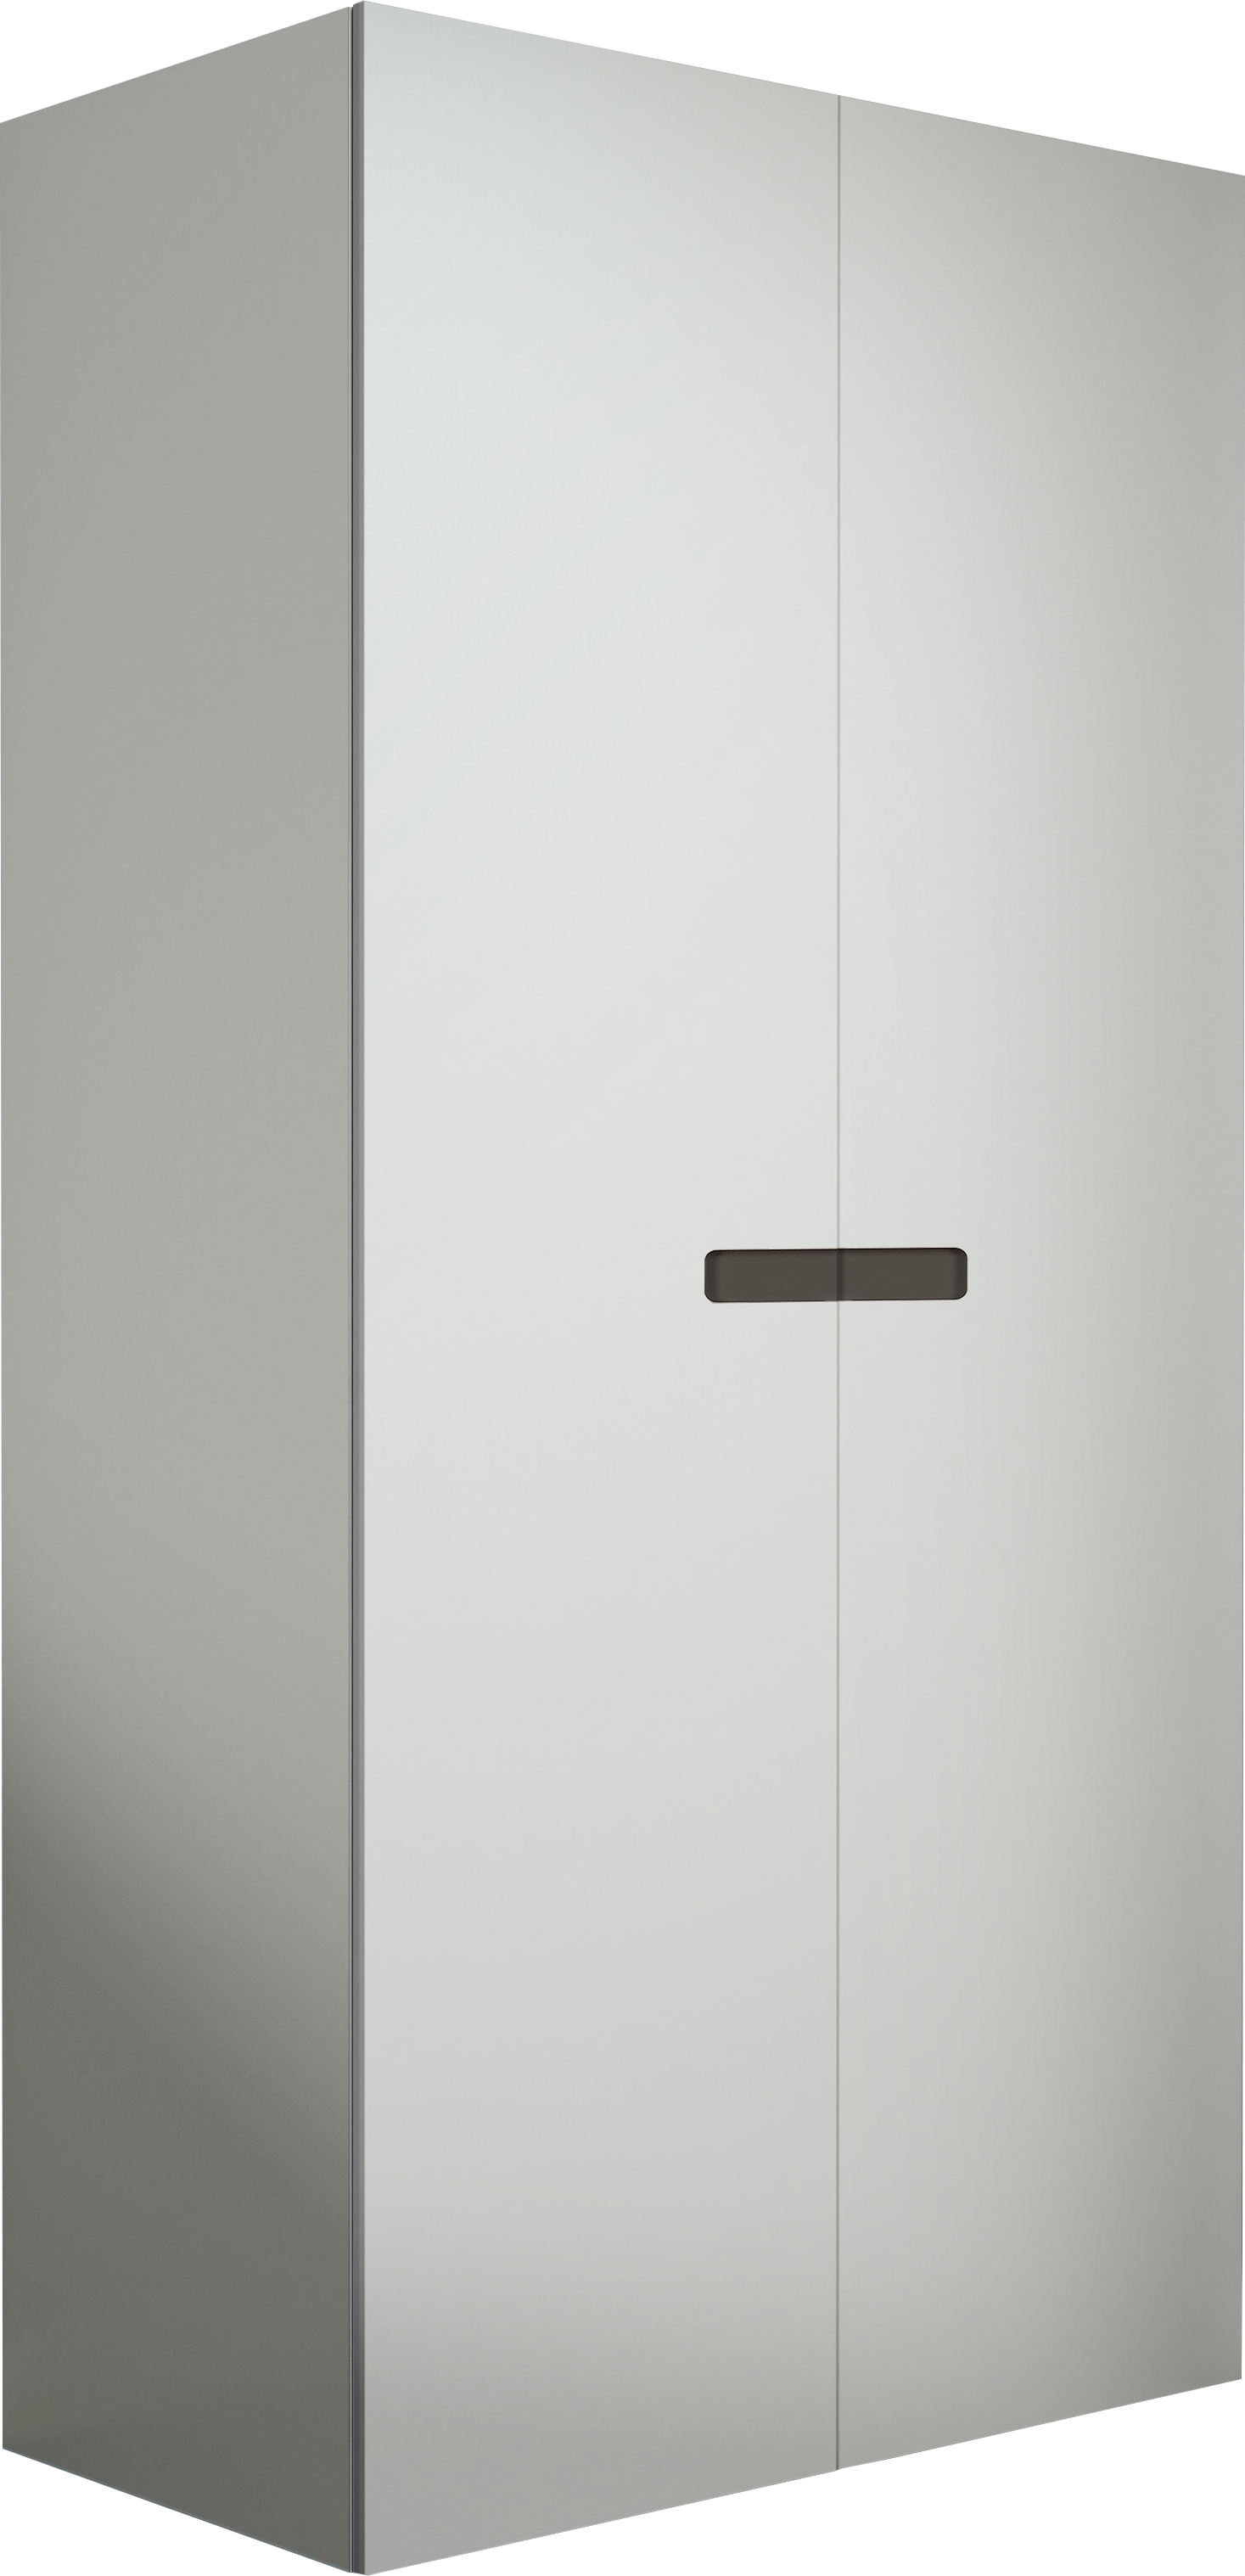 Armario ropero puerta abatible spaceo home nepal blanco-gris 240x120x60cm